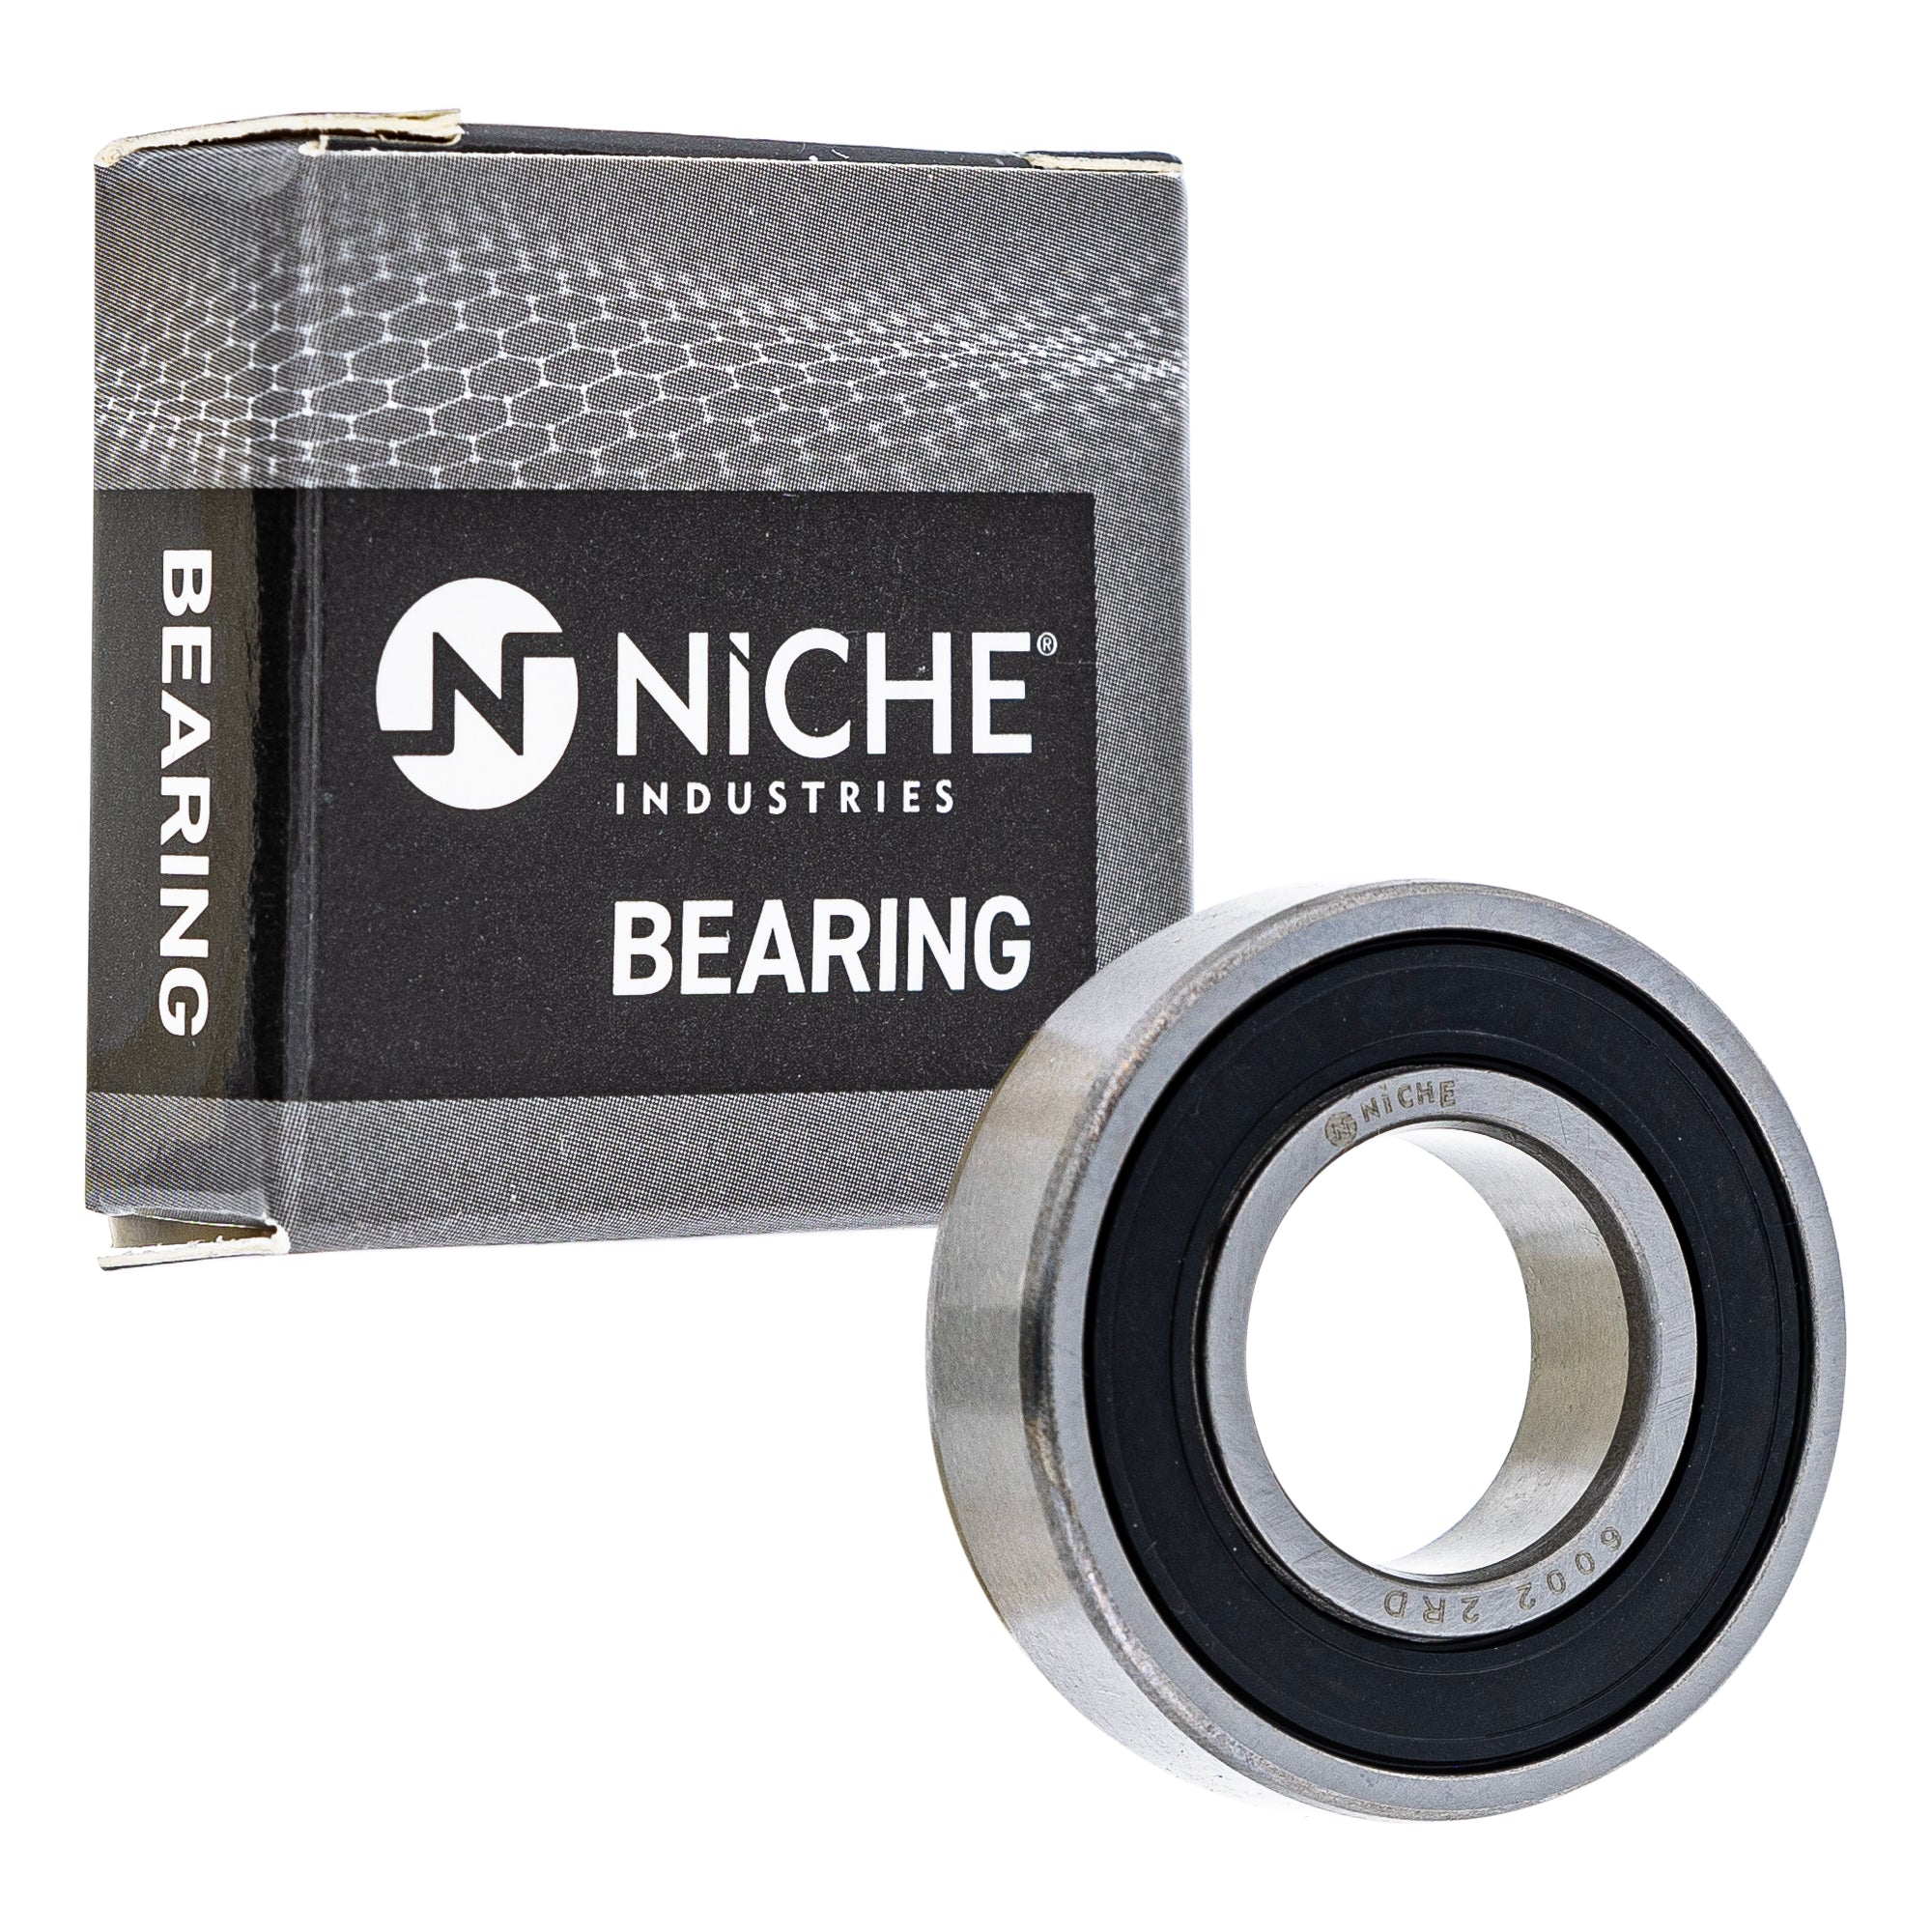 NICHE 519-CBB2334R Bearing for zOTHER HONDA Arctic Cat Textron YFZ50